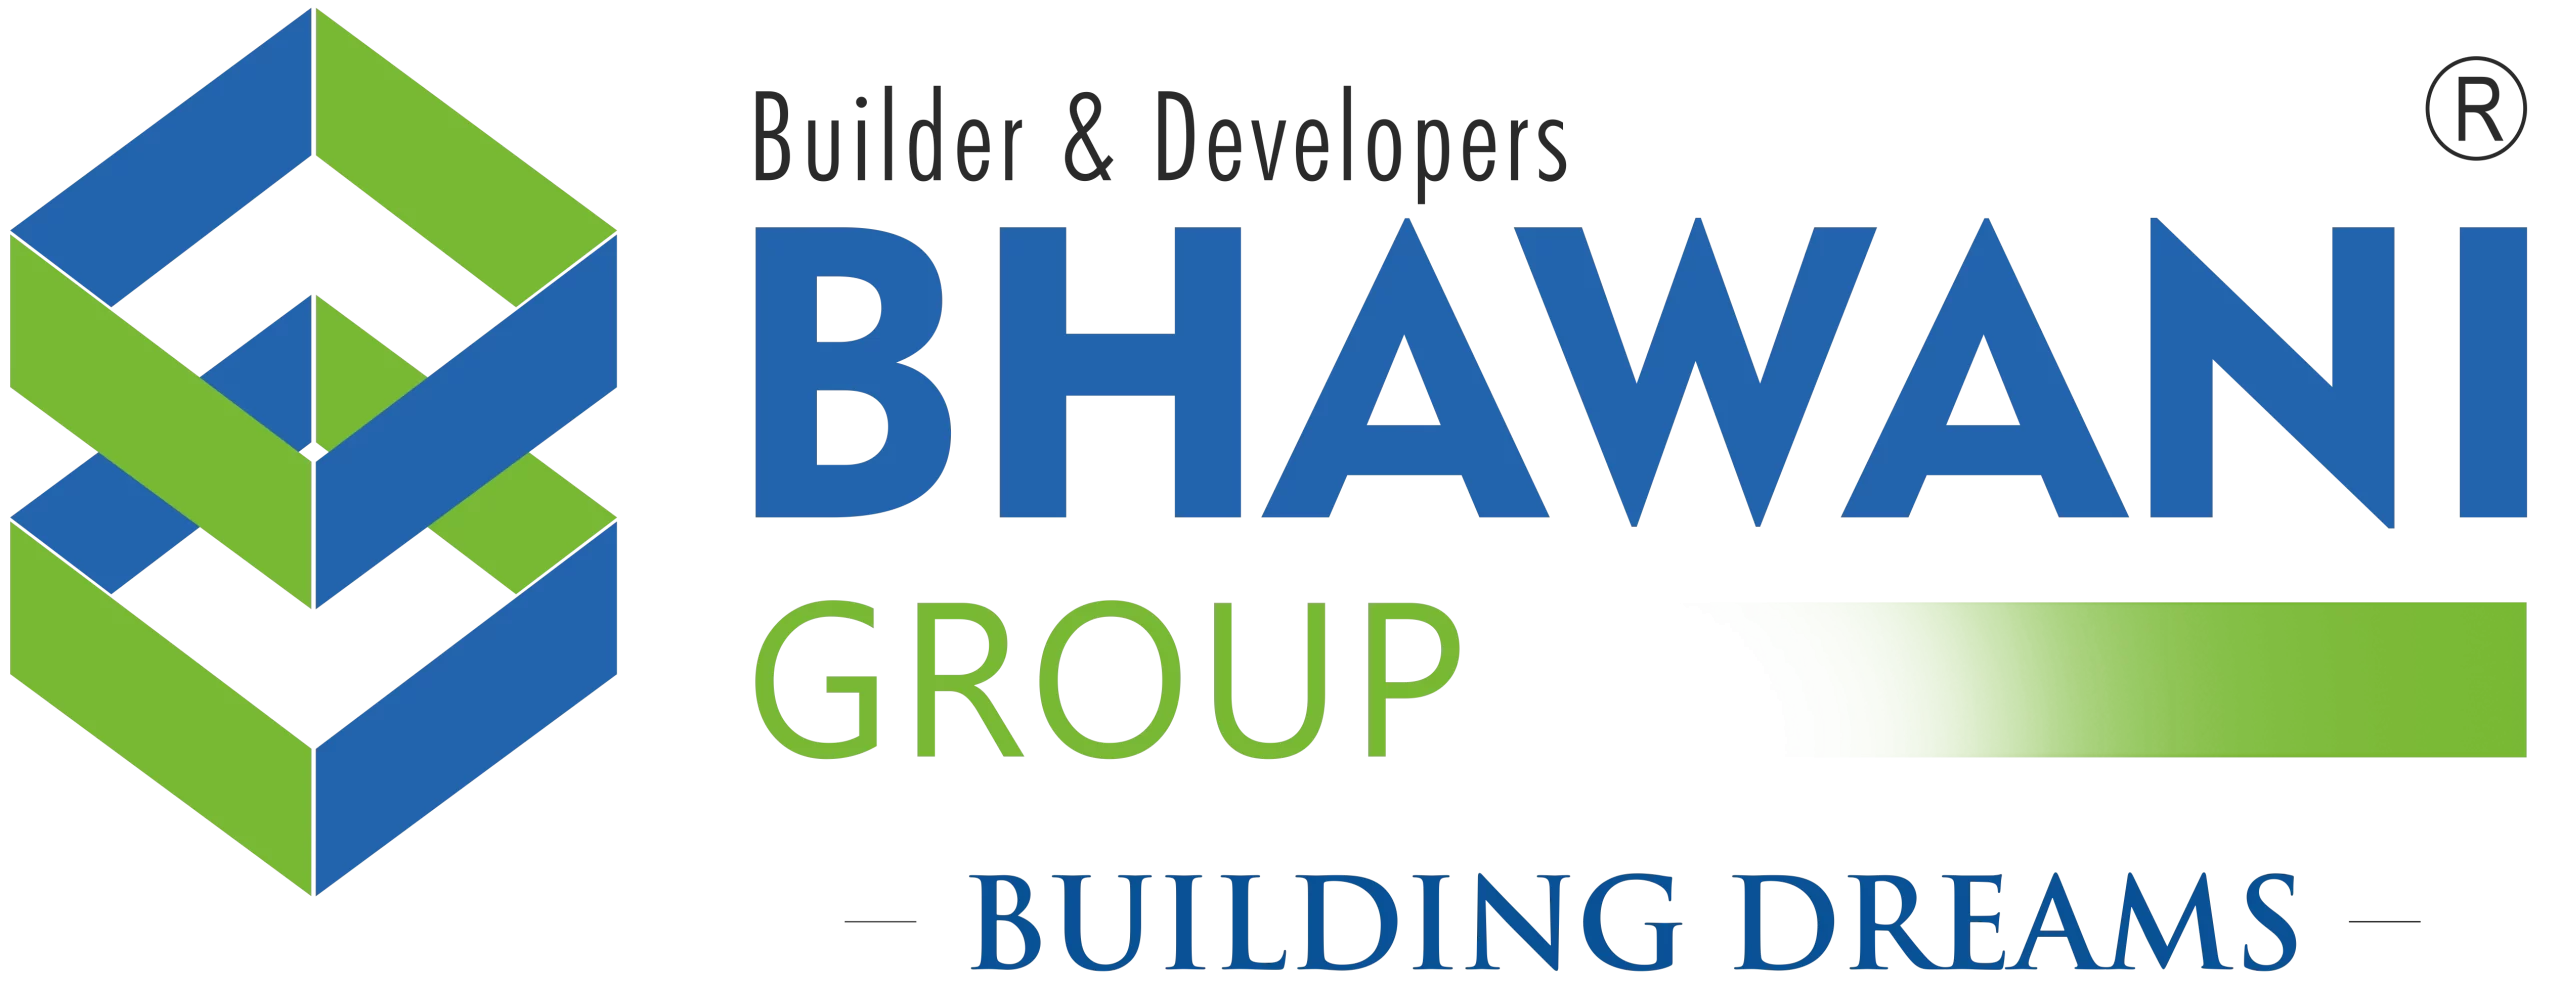 bhawani-group-logo